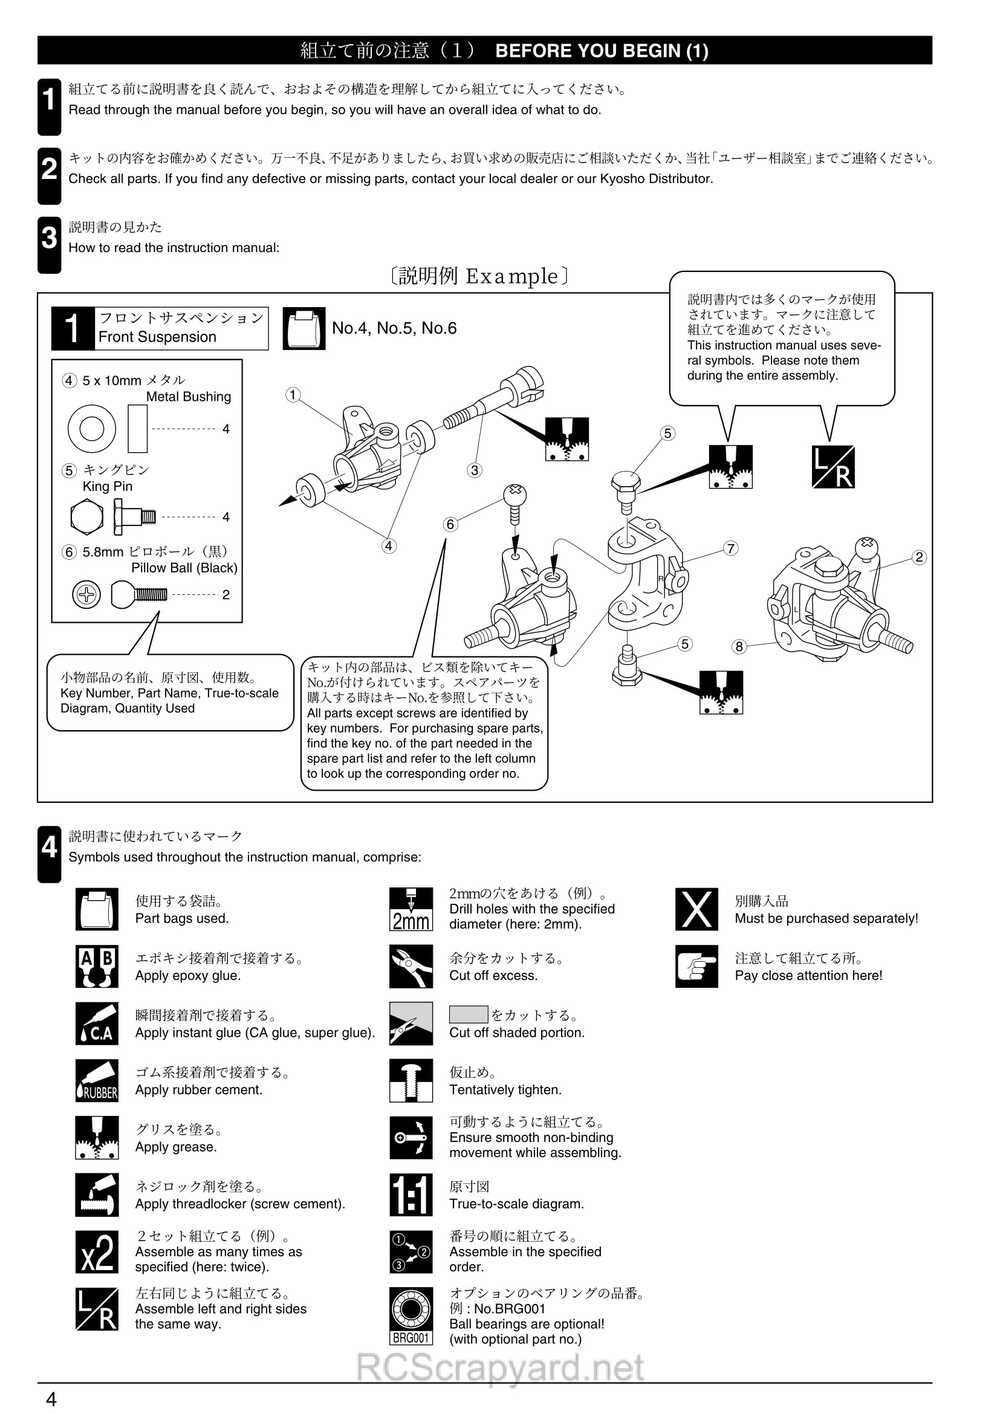 Kyosho - 31273 - Inferno-MP-7-5-Yuichi3 - Manual - Page 04